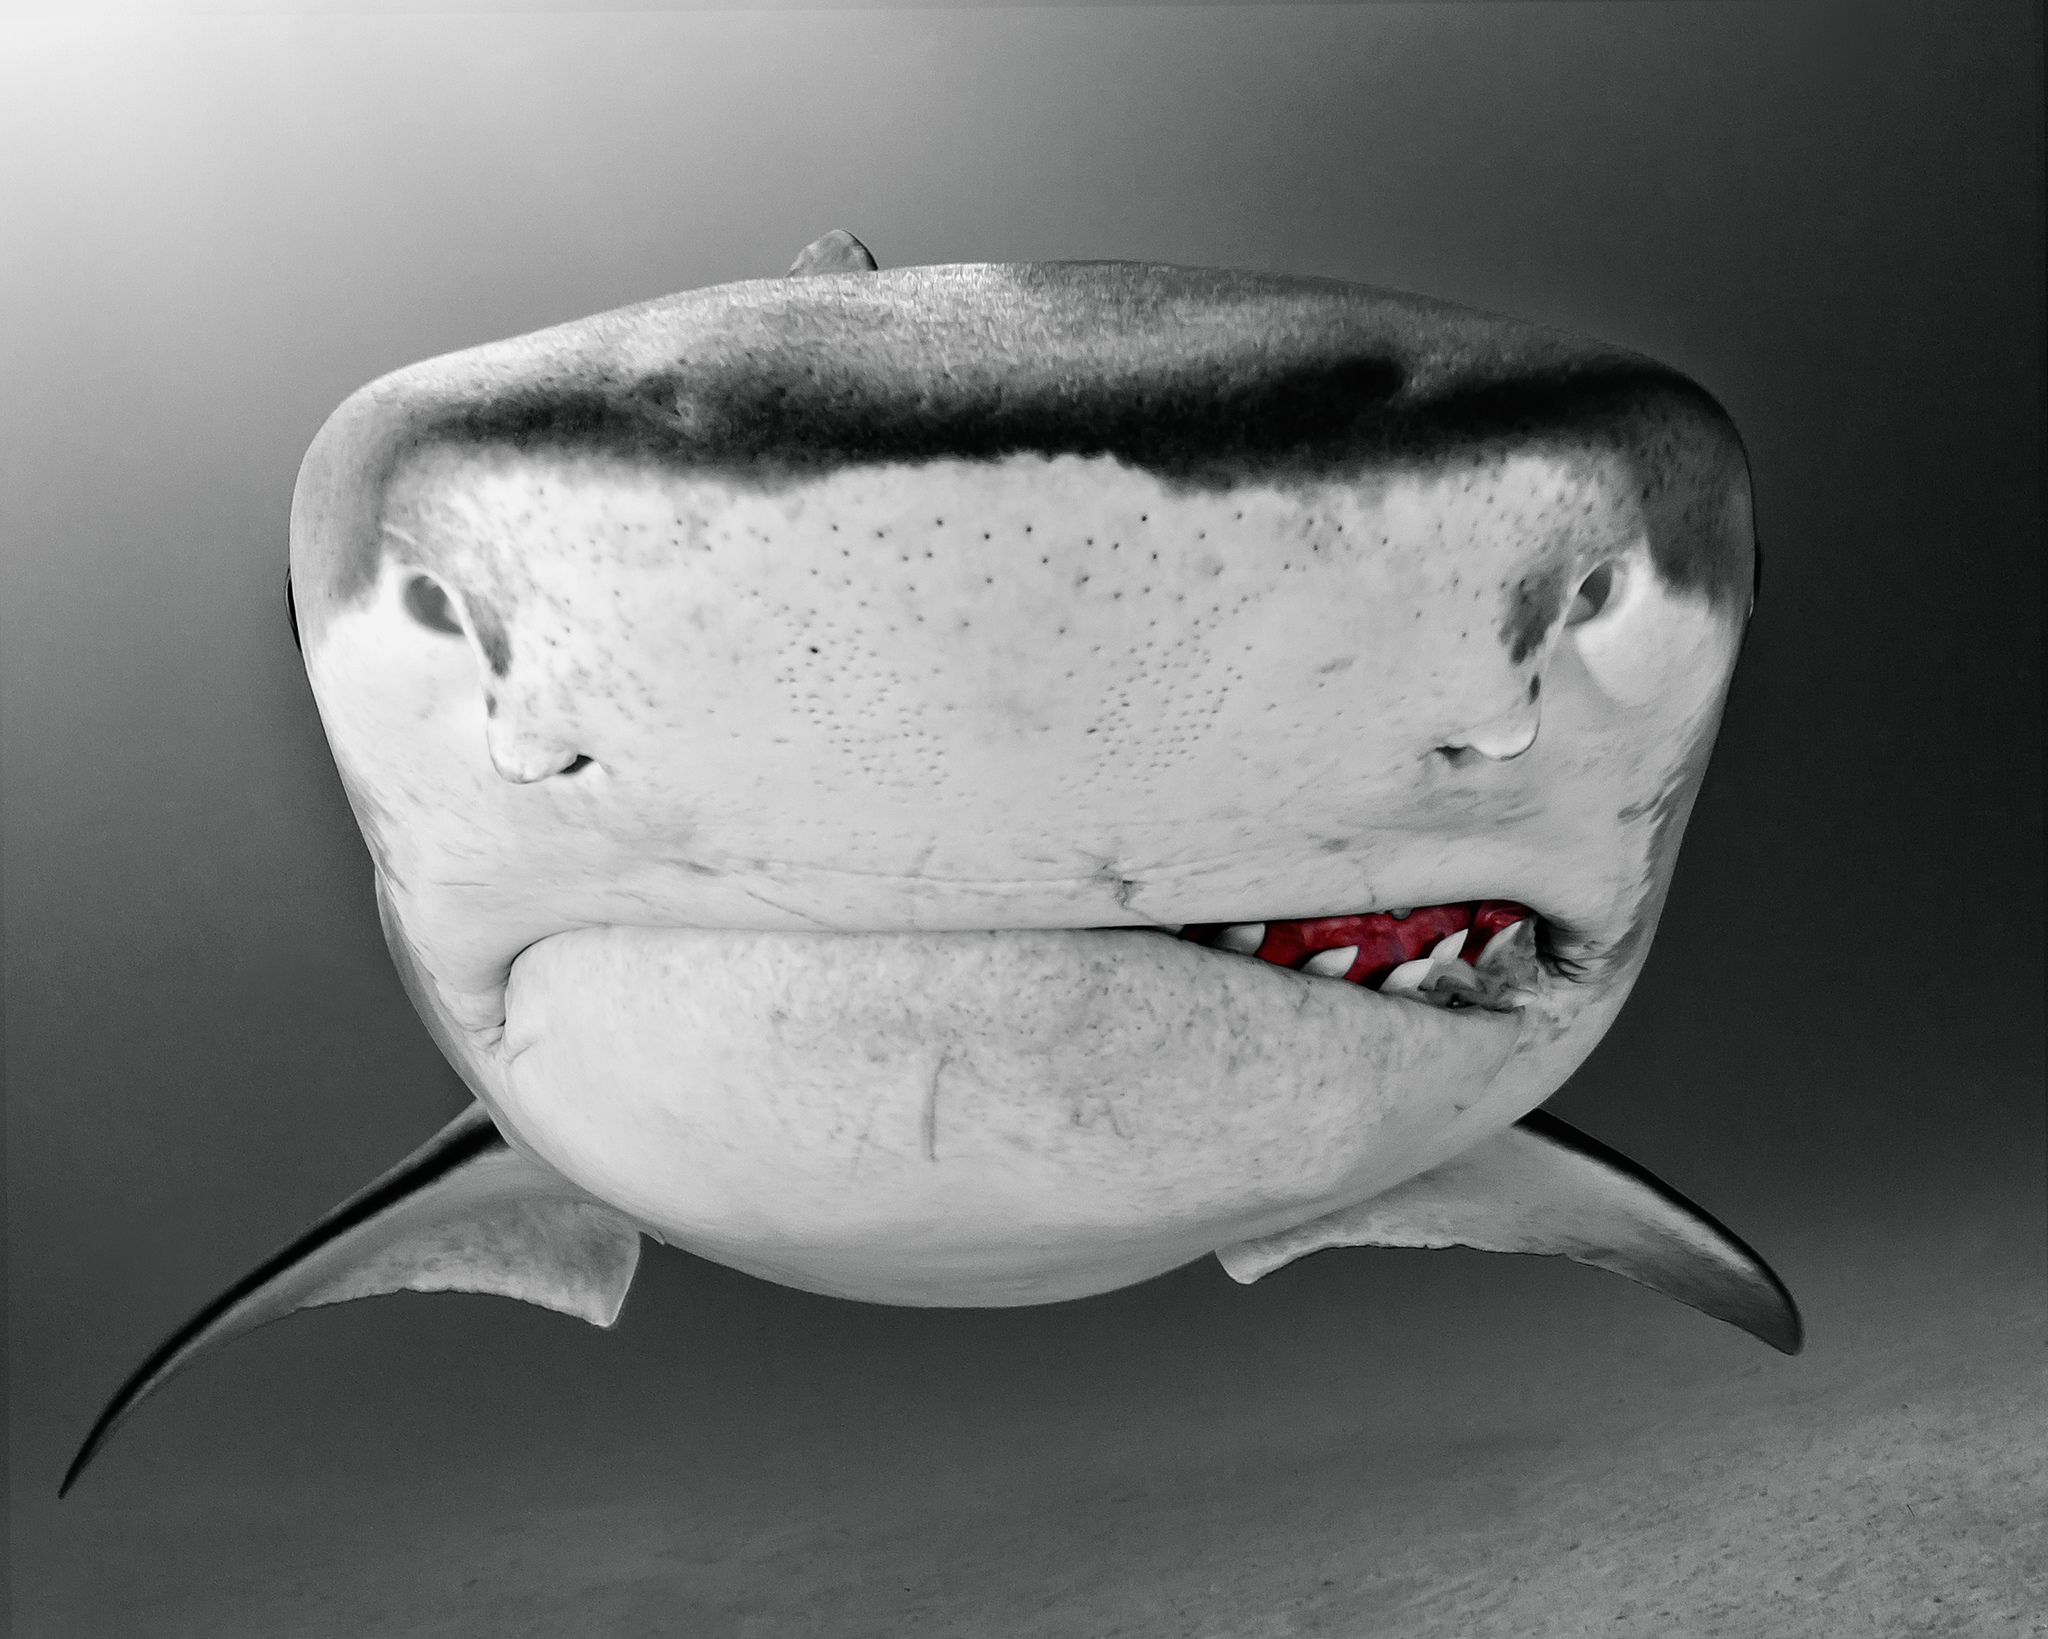 Scary shark. Акула фотограф. Смешная акула. Акула курит.